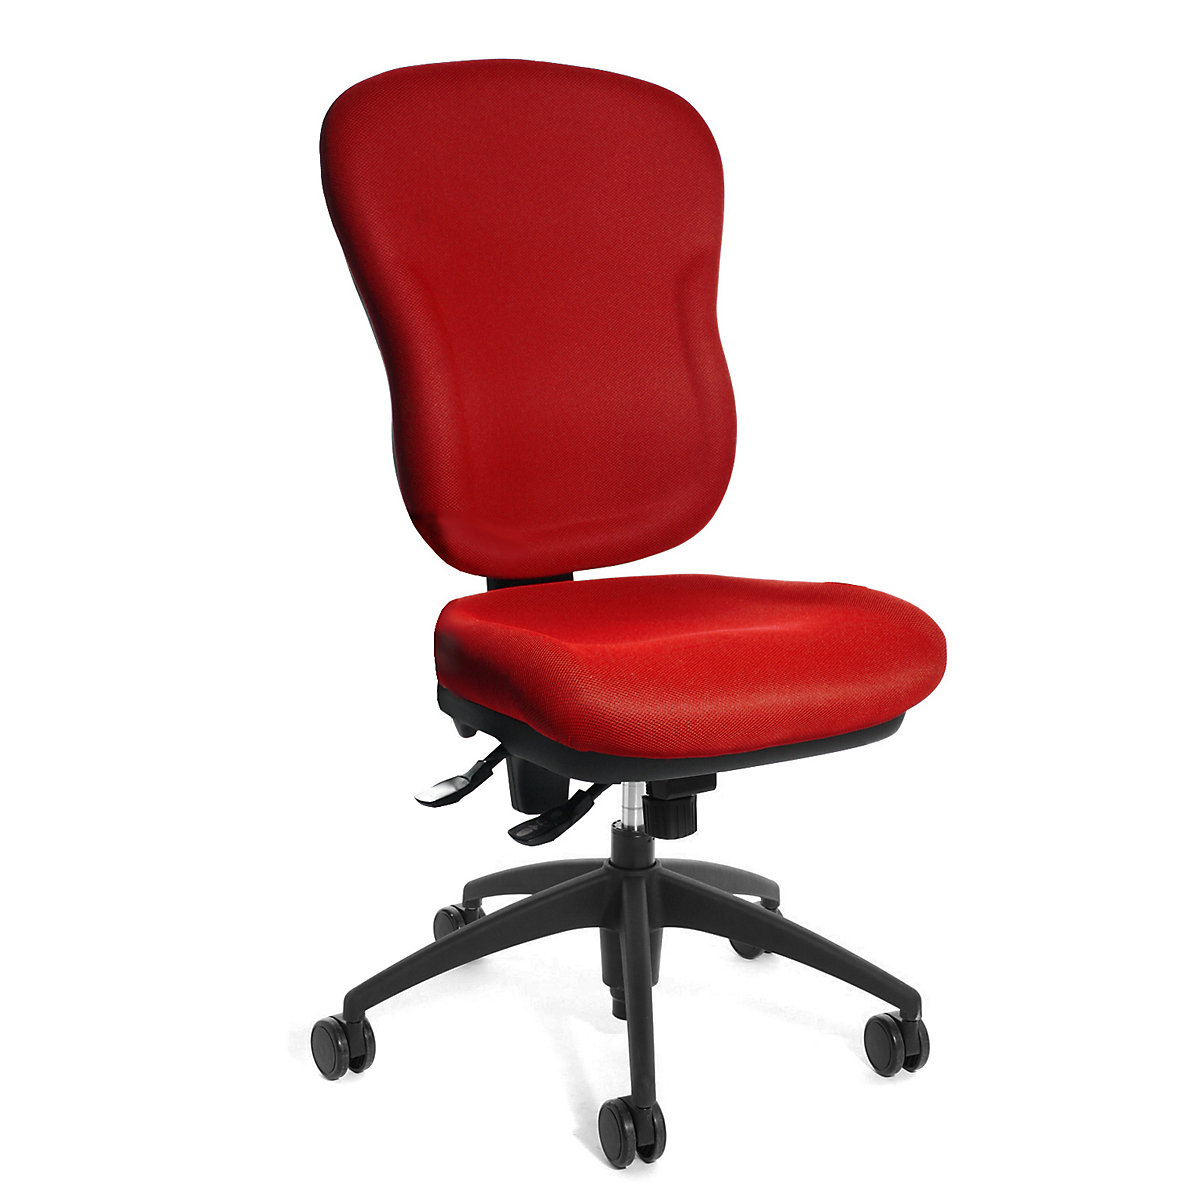 WELLPOINT 30 SY office swivel chair - Topstar